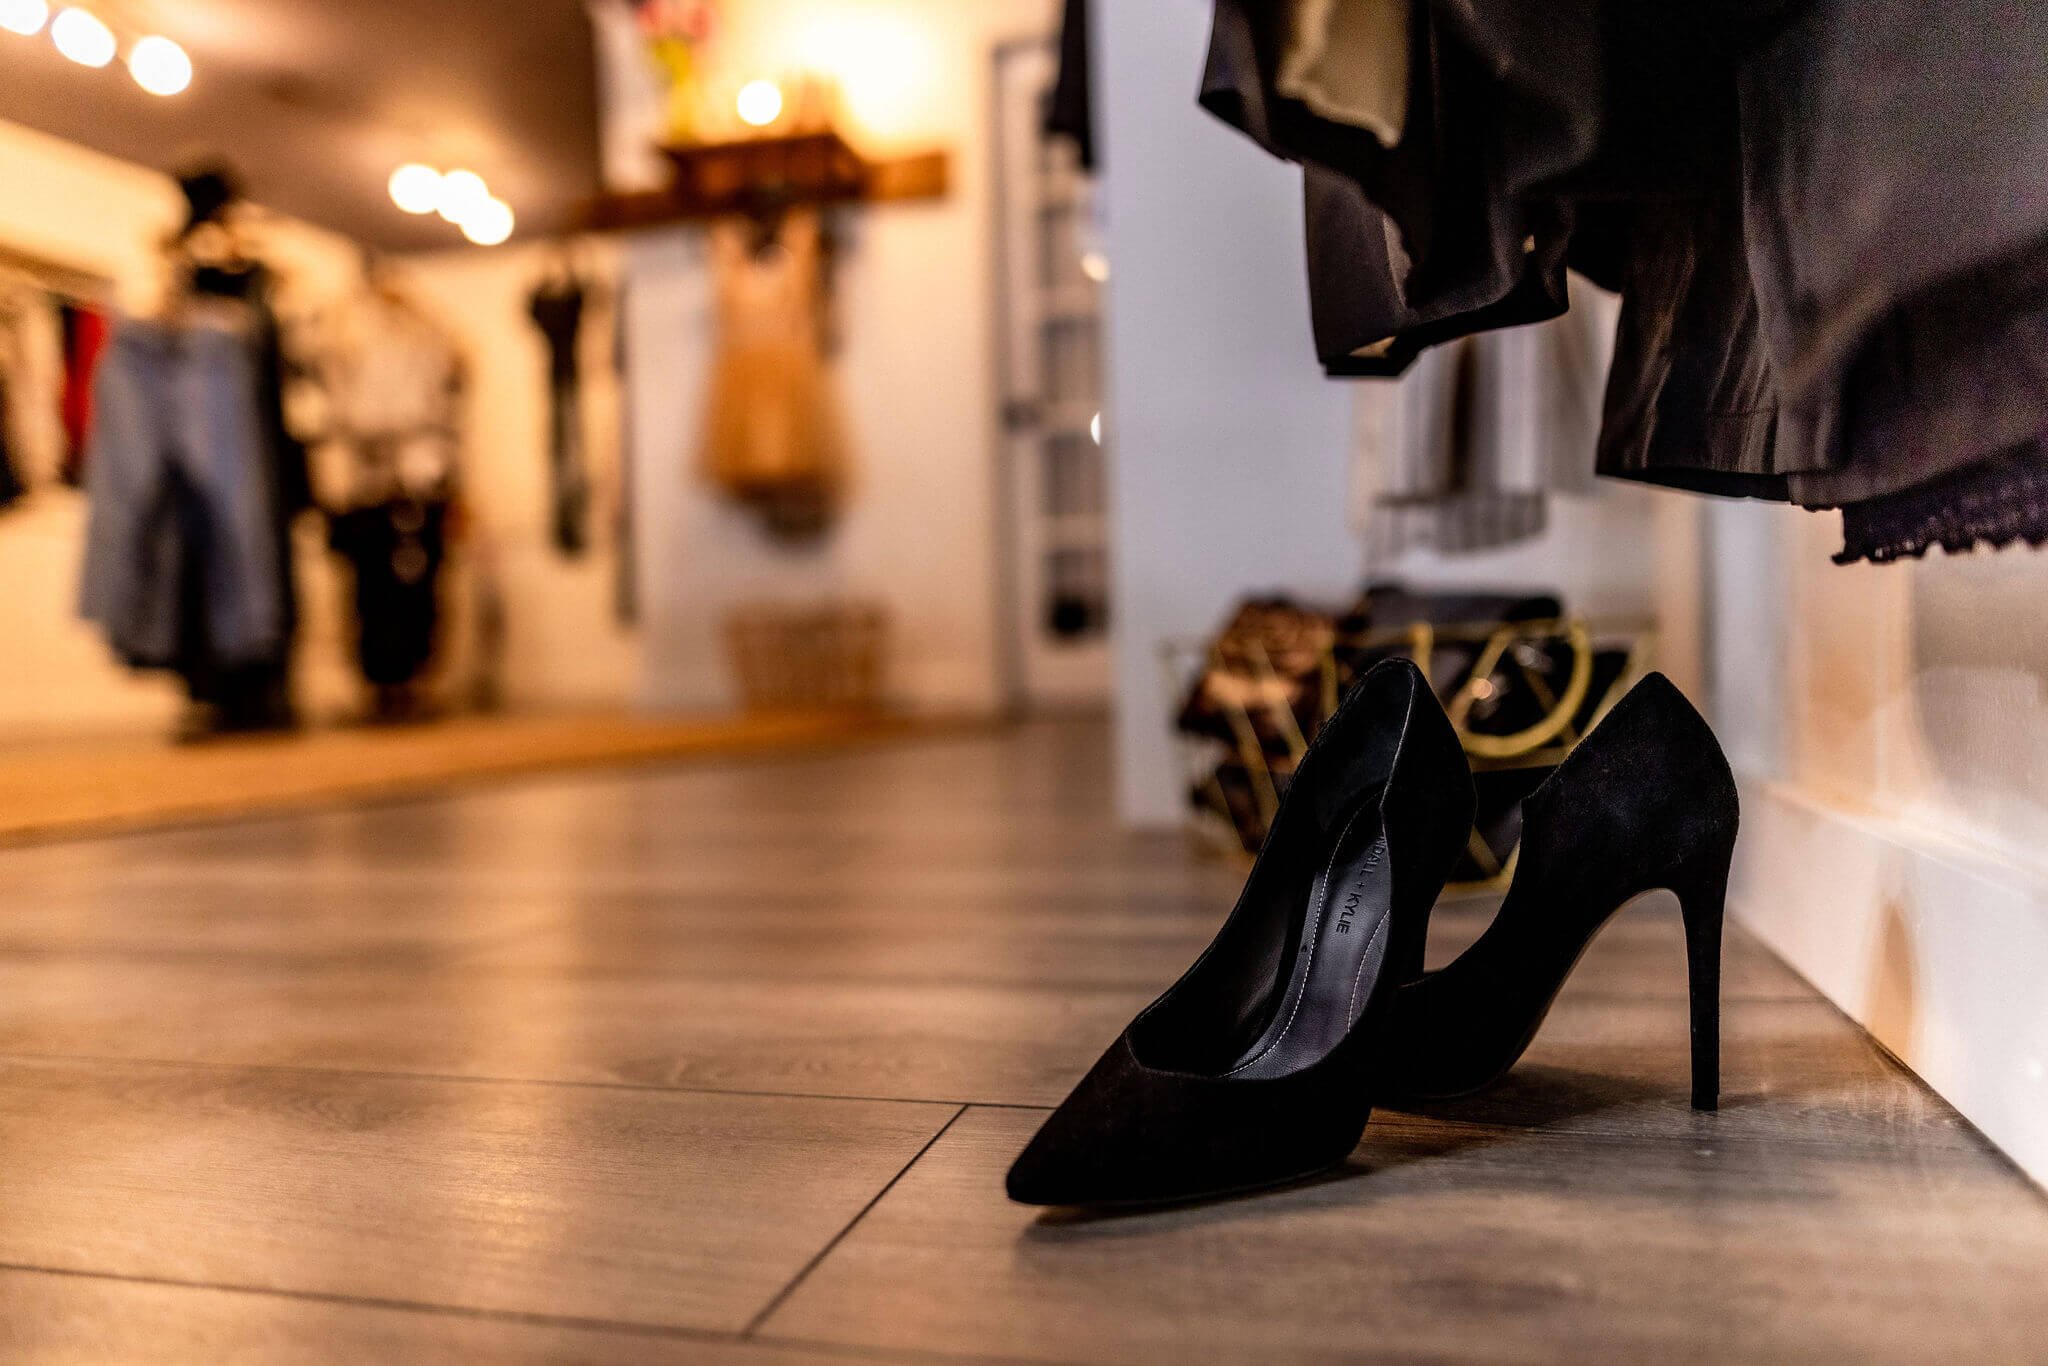 Interior of Goldstone Boutique with black pump heels